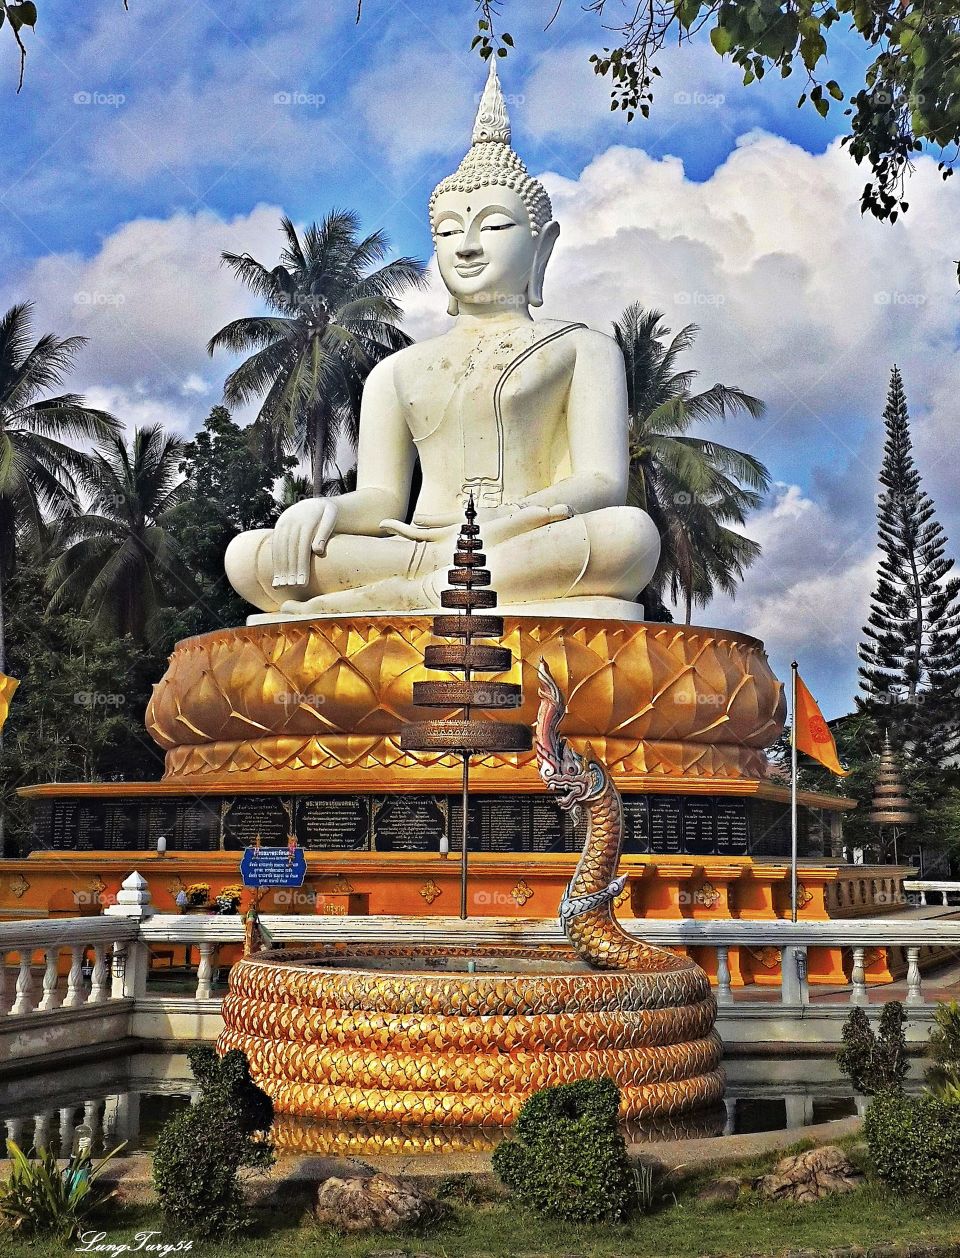 Big Buddha, Wat Laem Son, Pak Nam Lang Suan

Chumphon Thailand